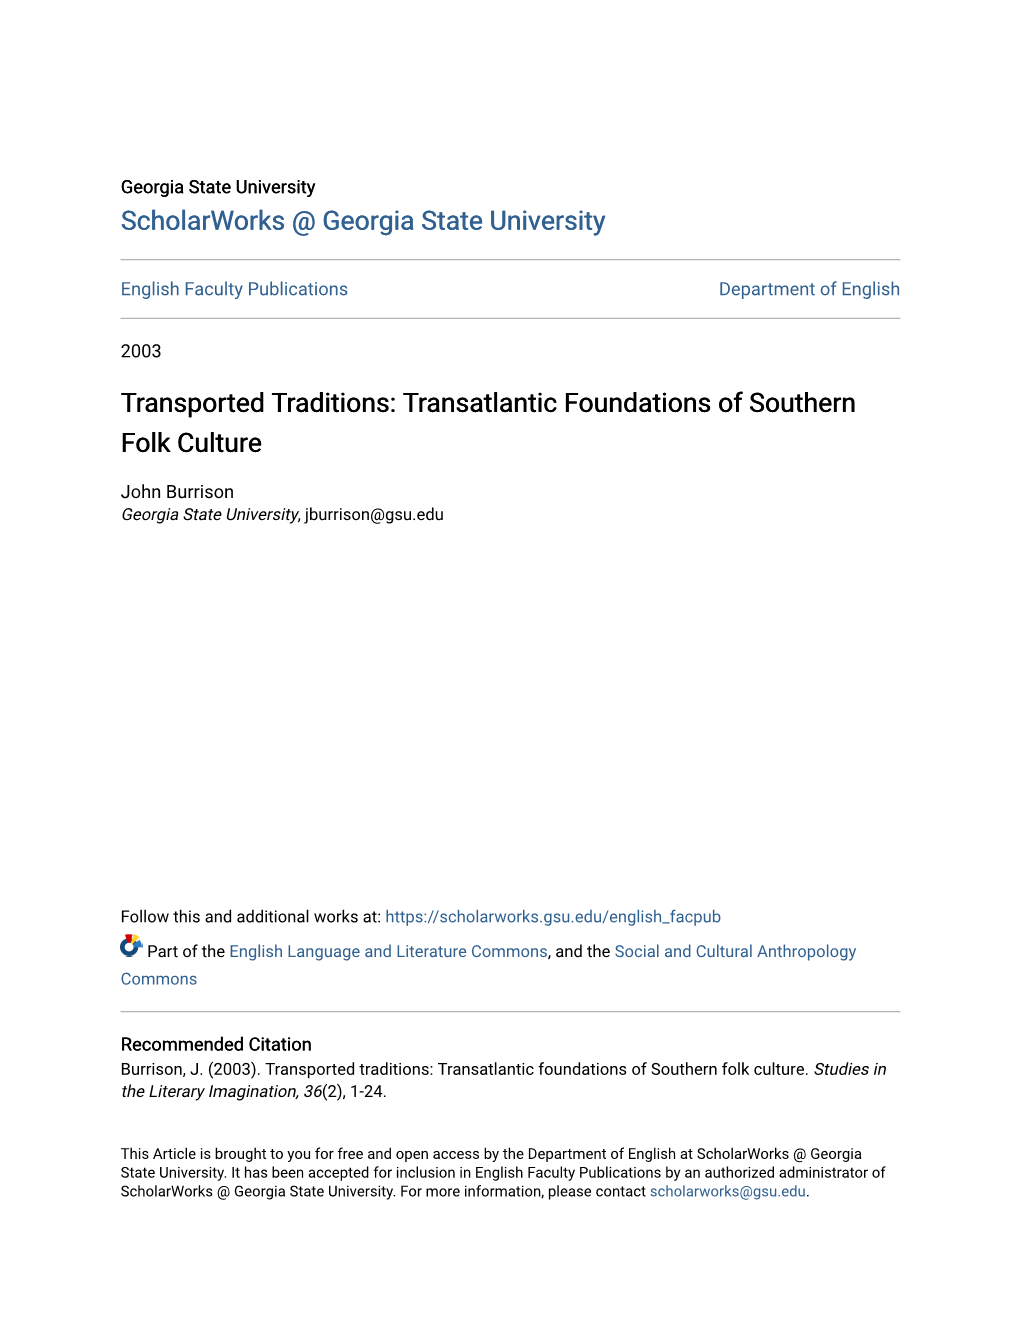 Transatlantic Foundations of Southern Folk Culture